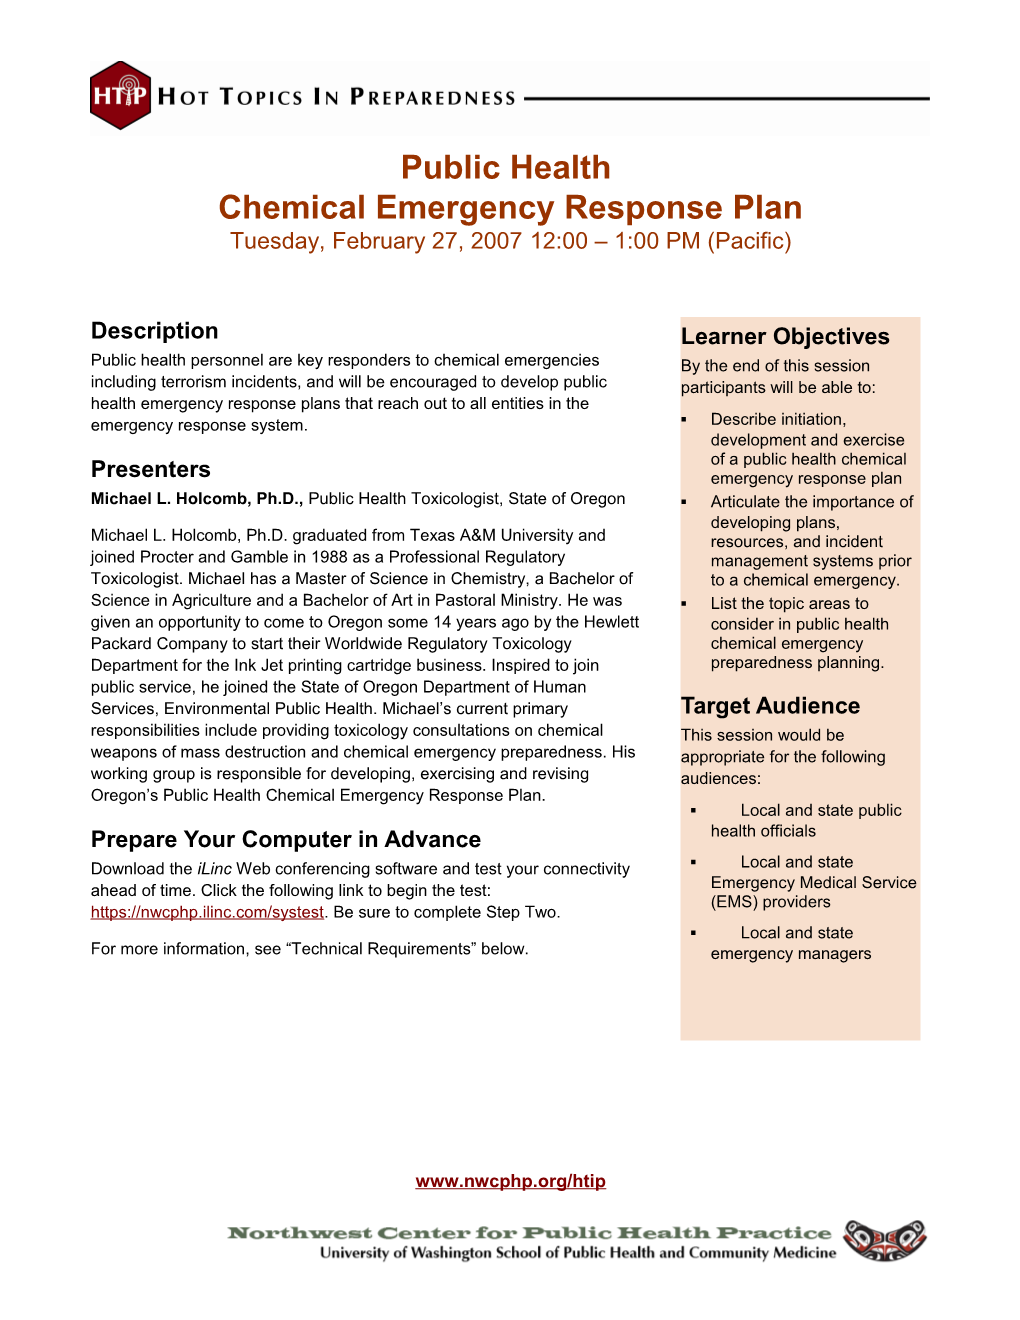 Public Health Chemical Emergency Response Plan